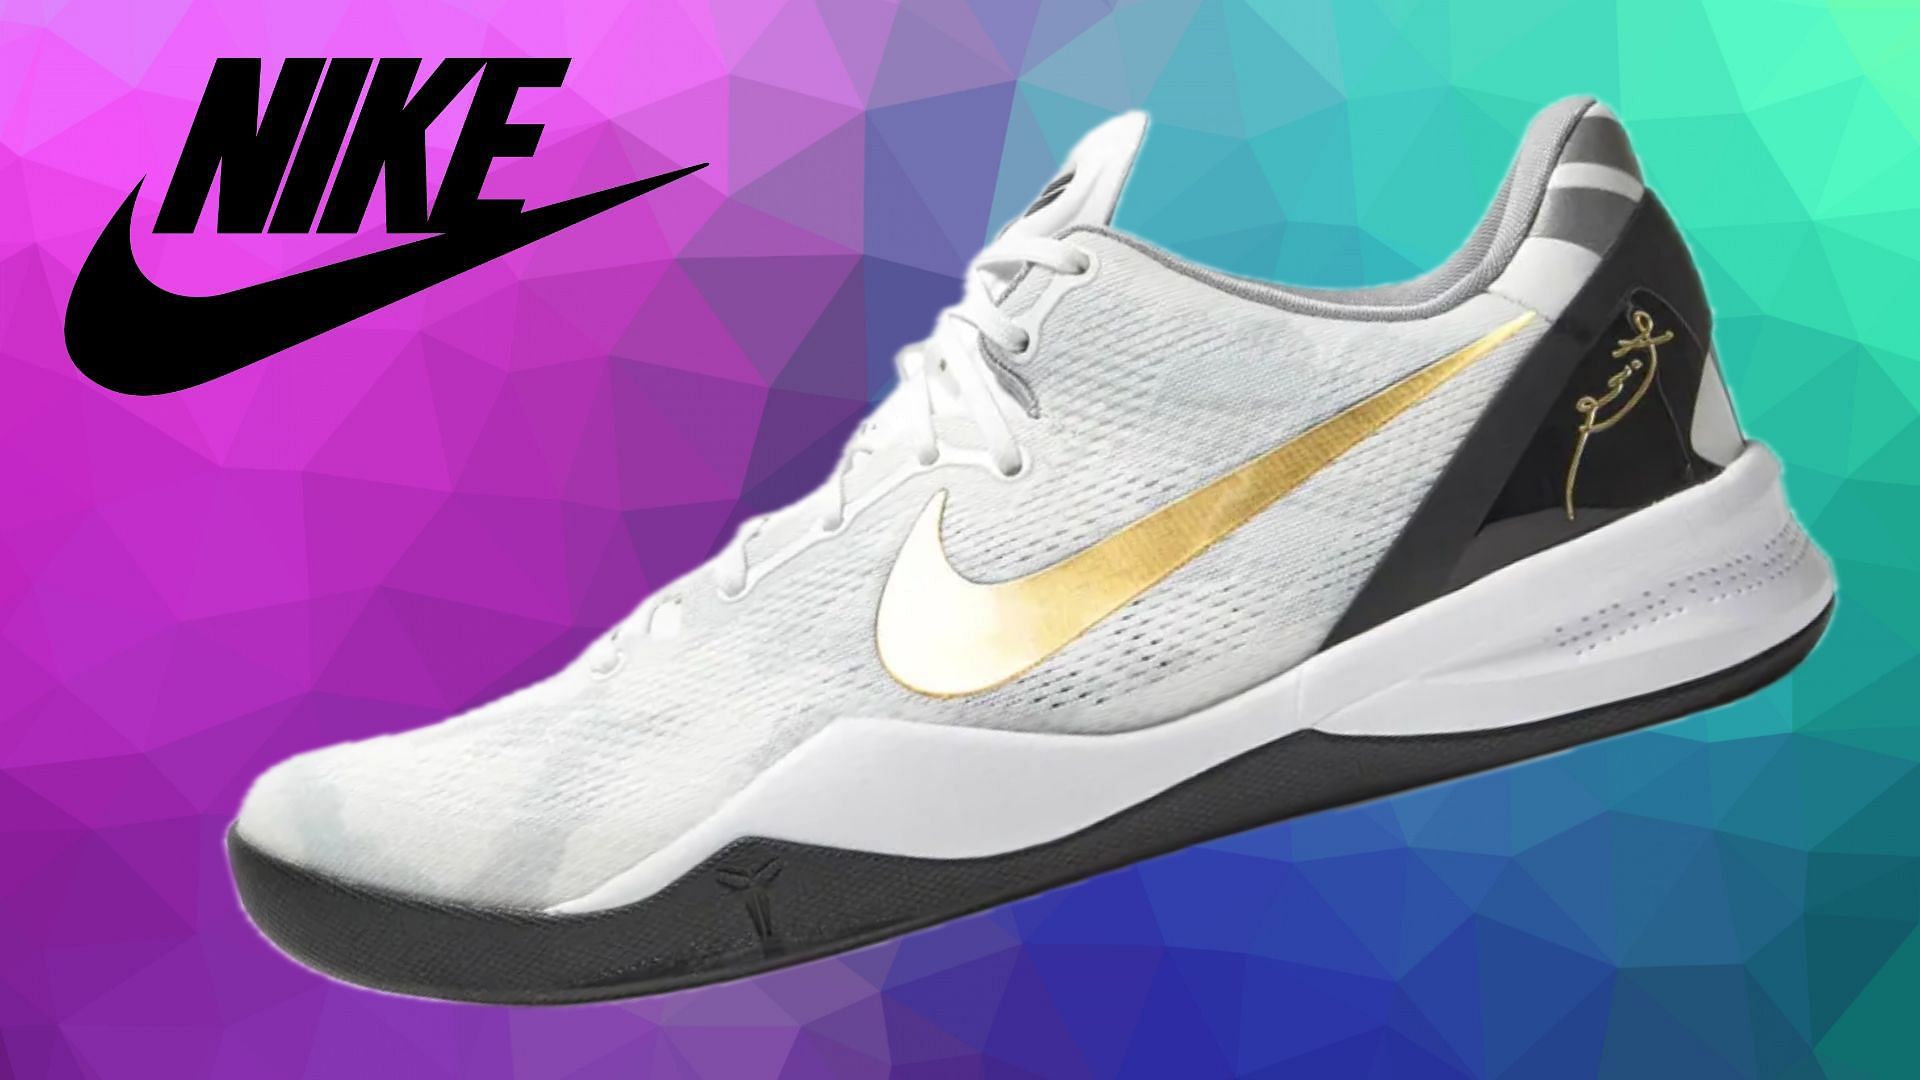 Kobe Bryant: Nike Kobe 8 Protro Court Purple shoes: Where to get